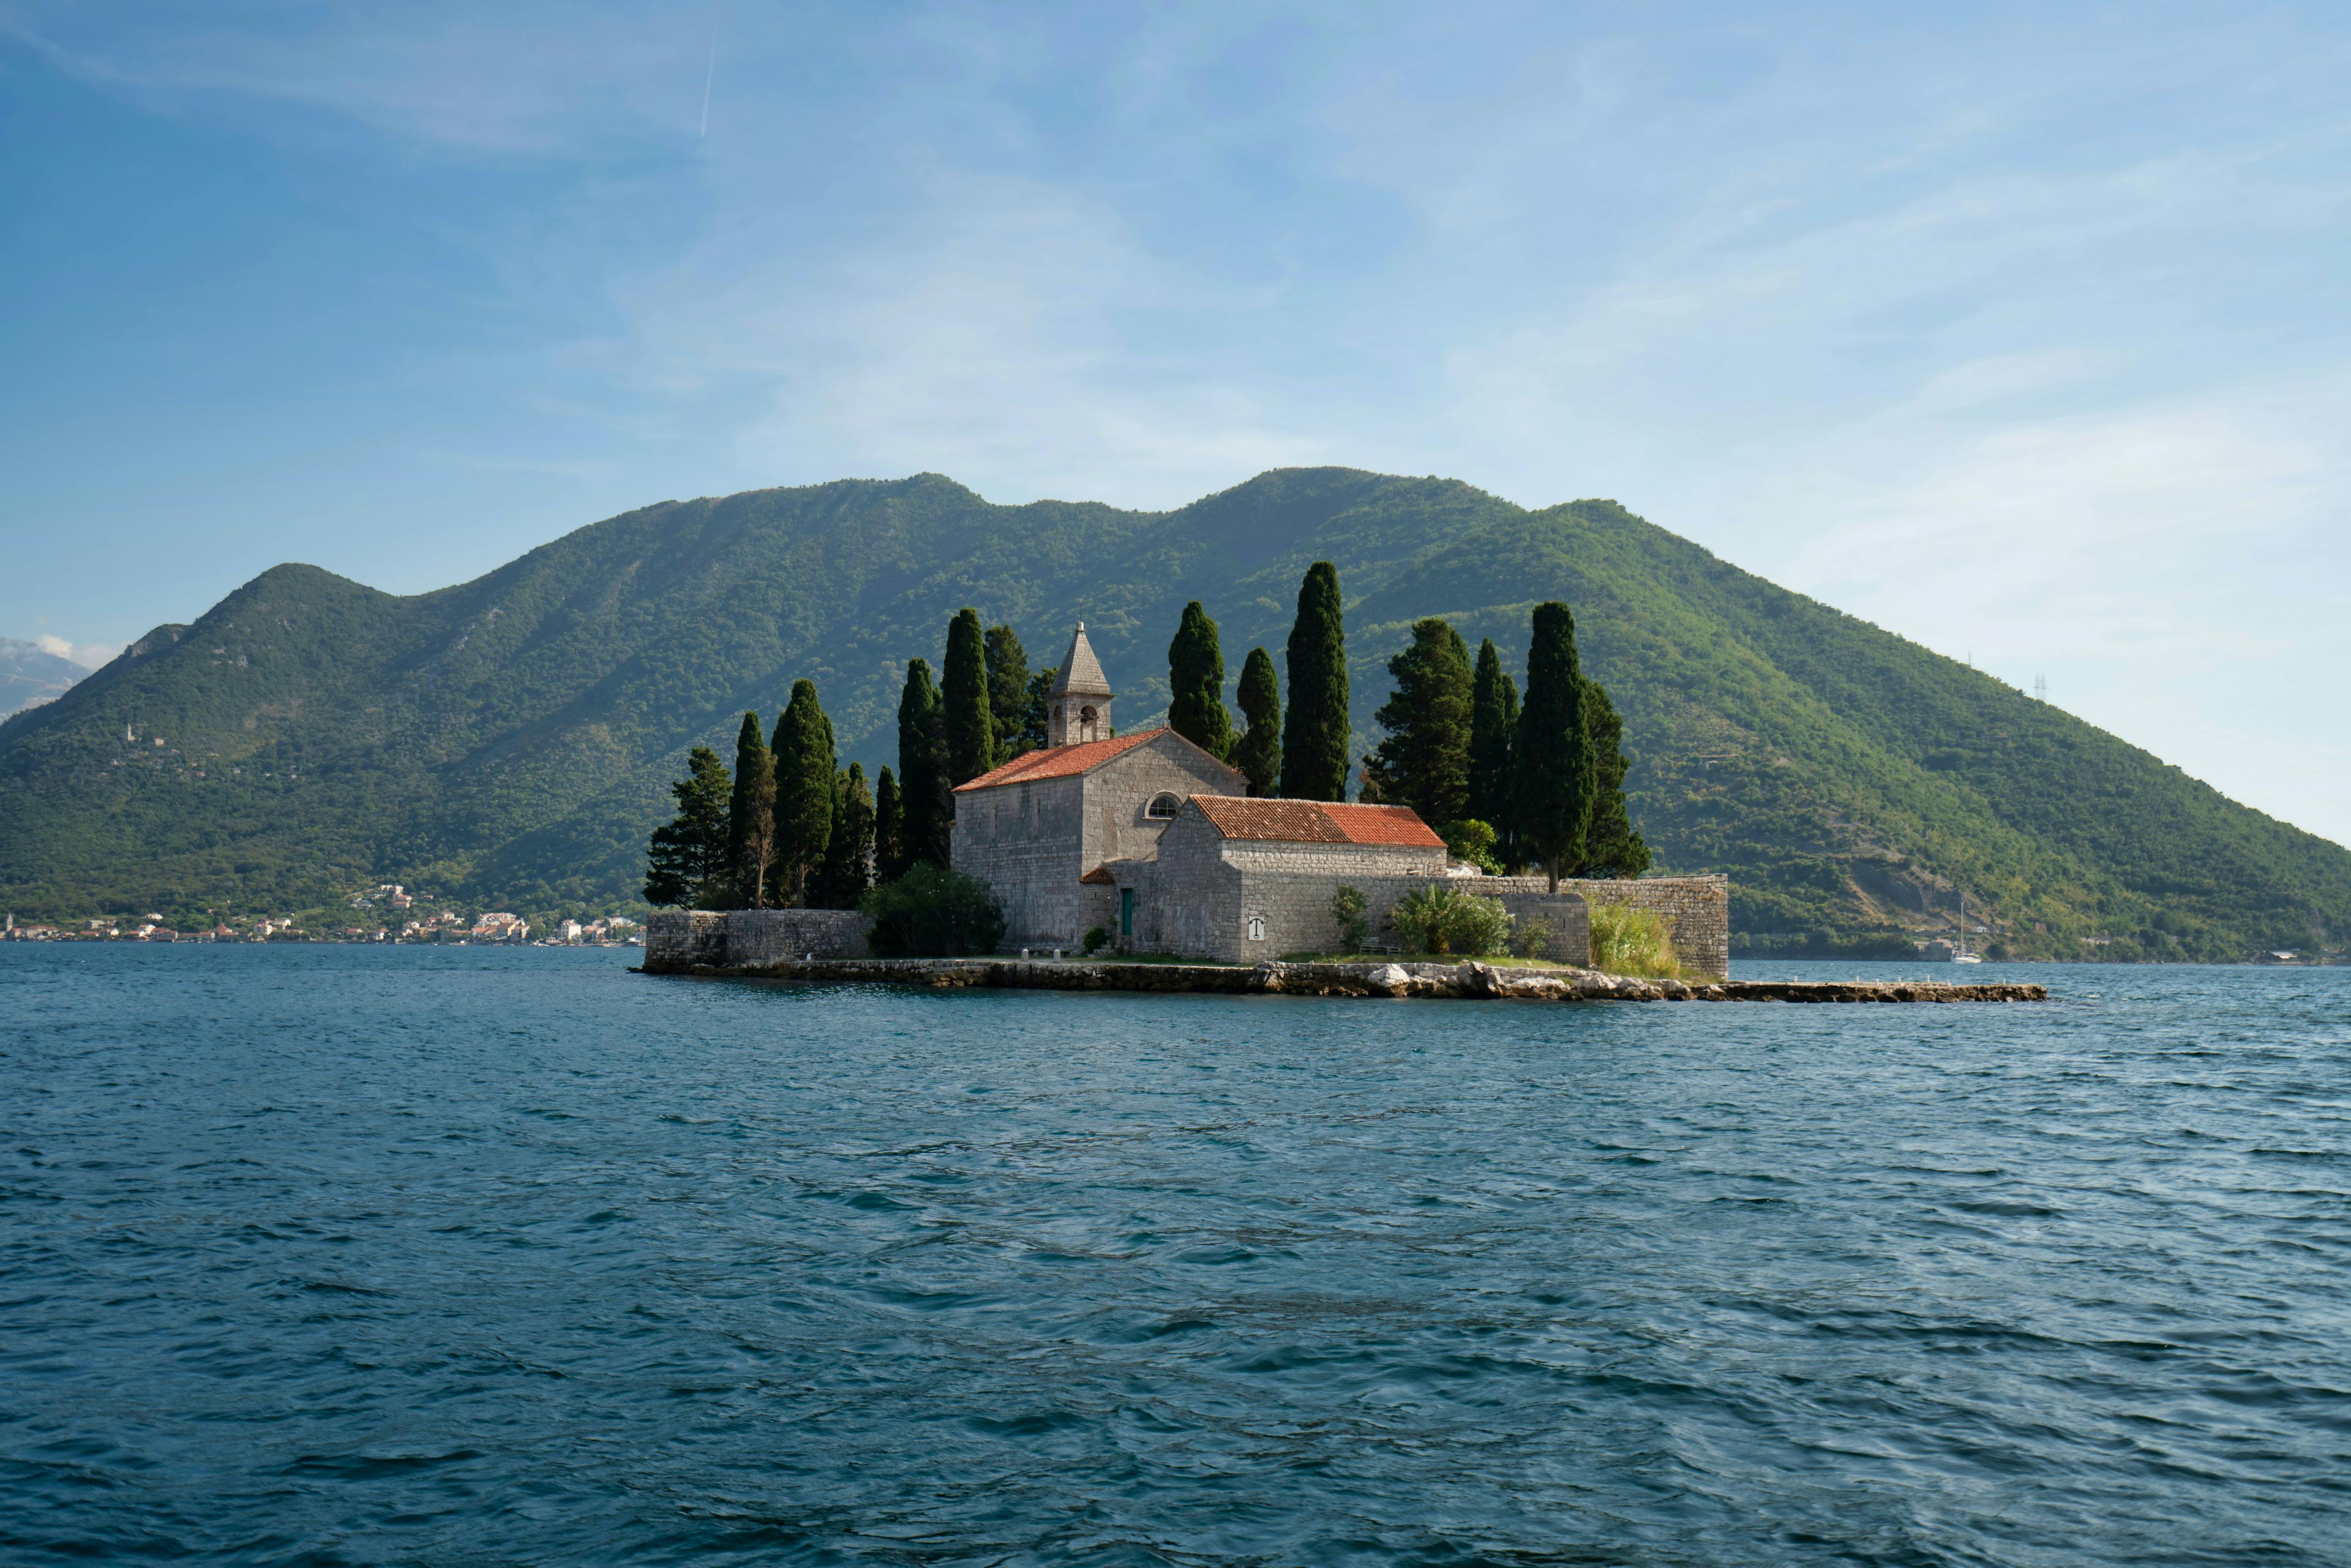 We're reimagining a fairer way to visit Montenegro